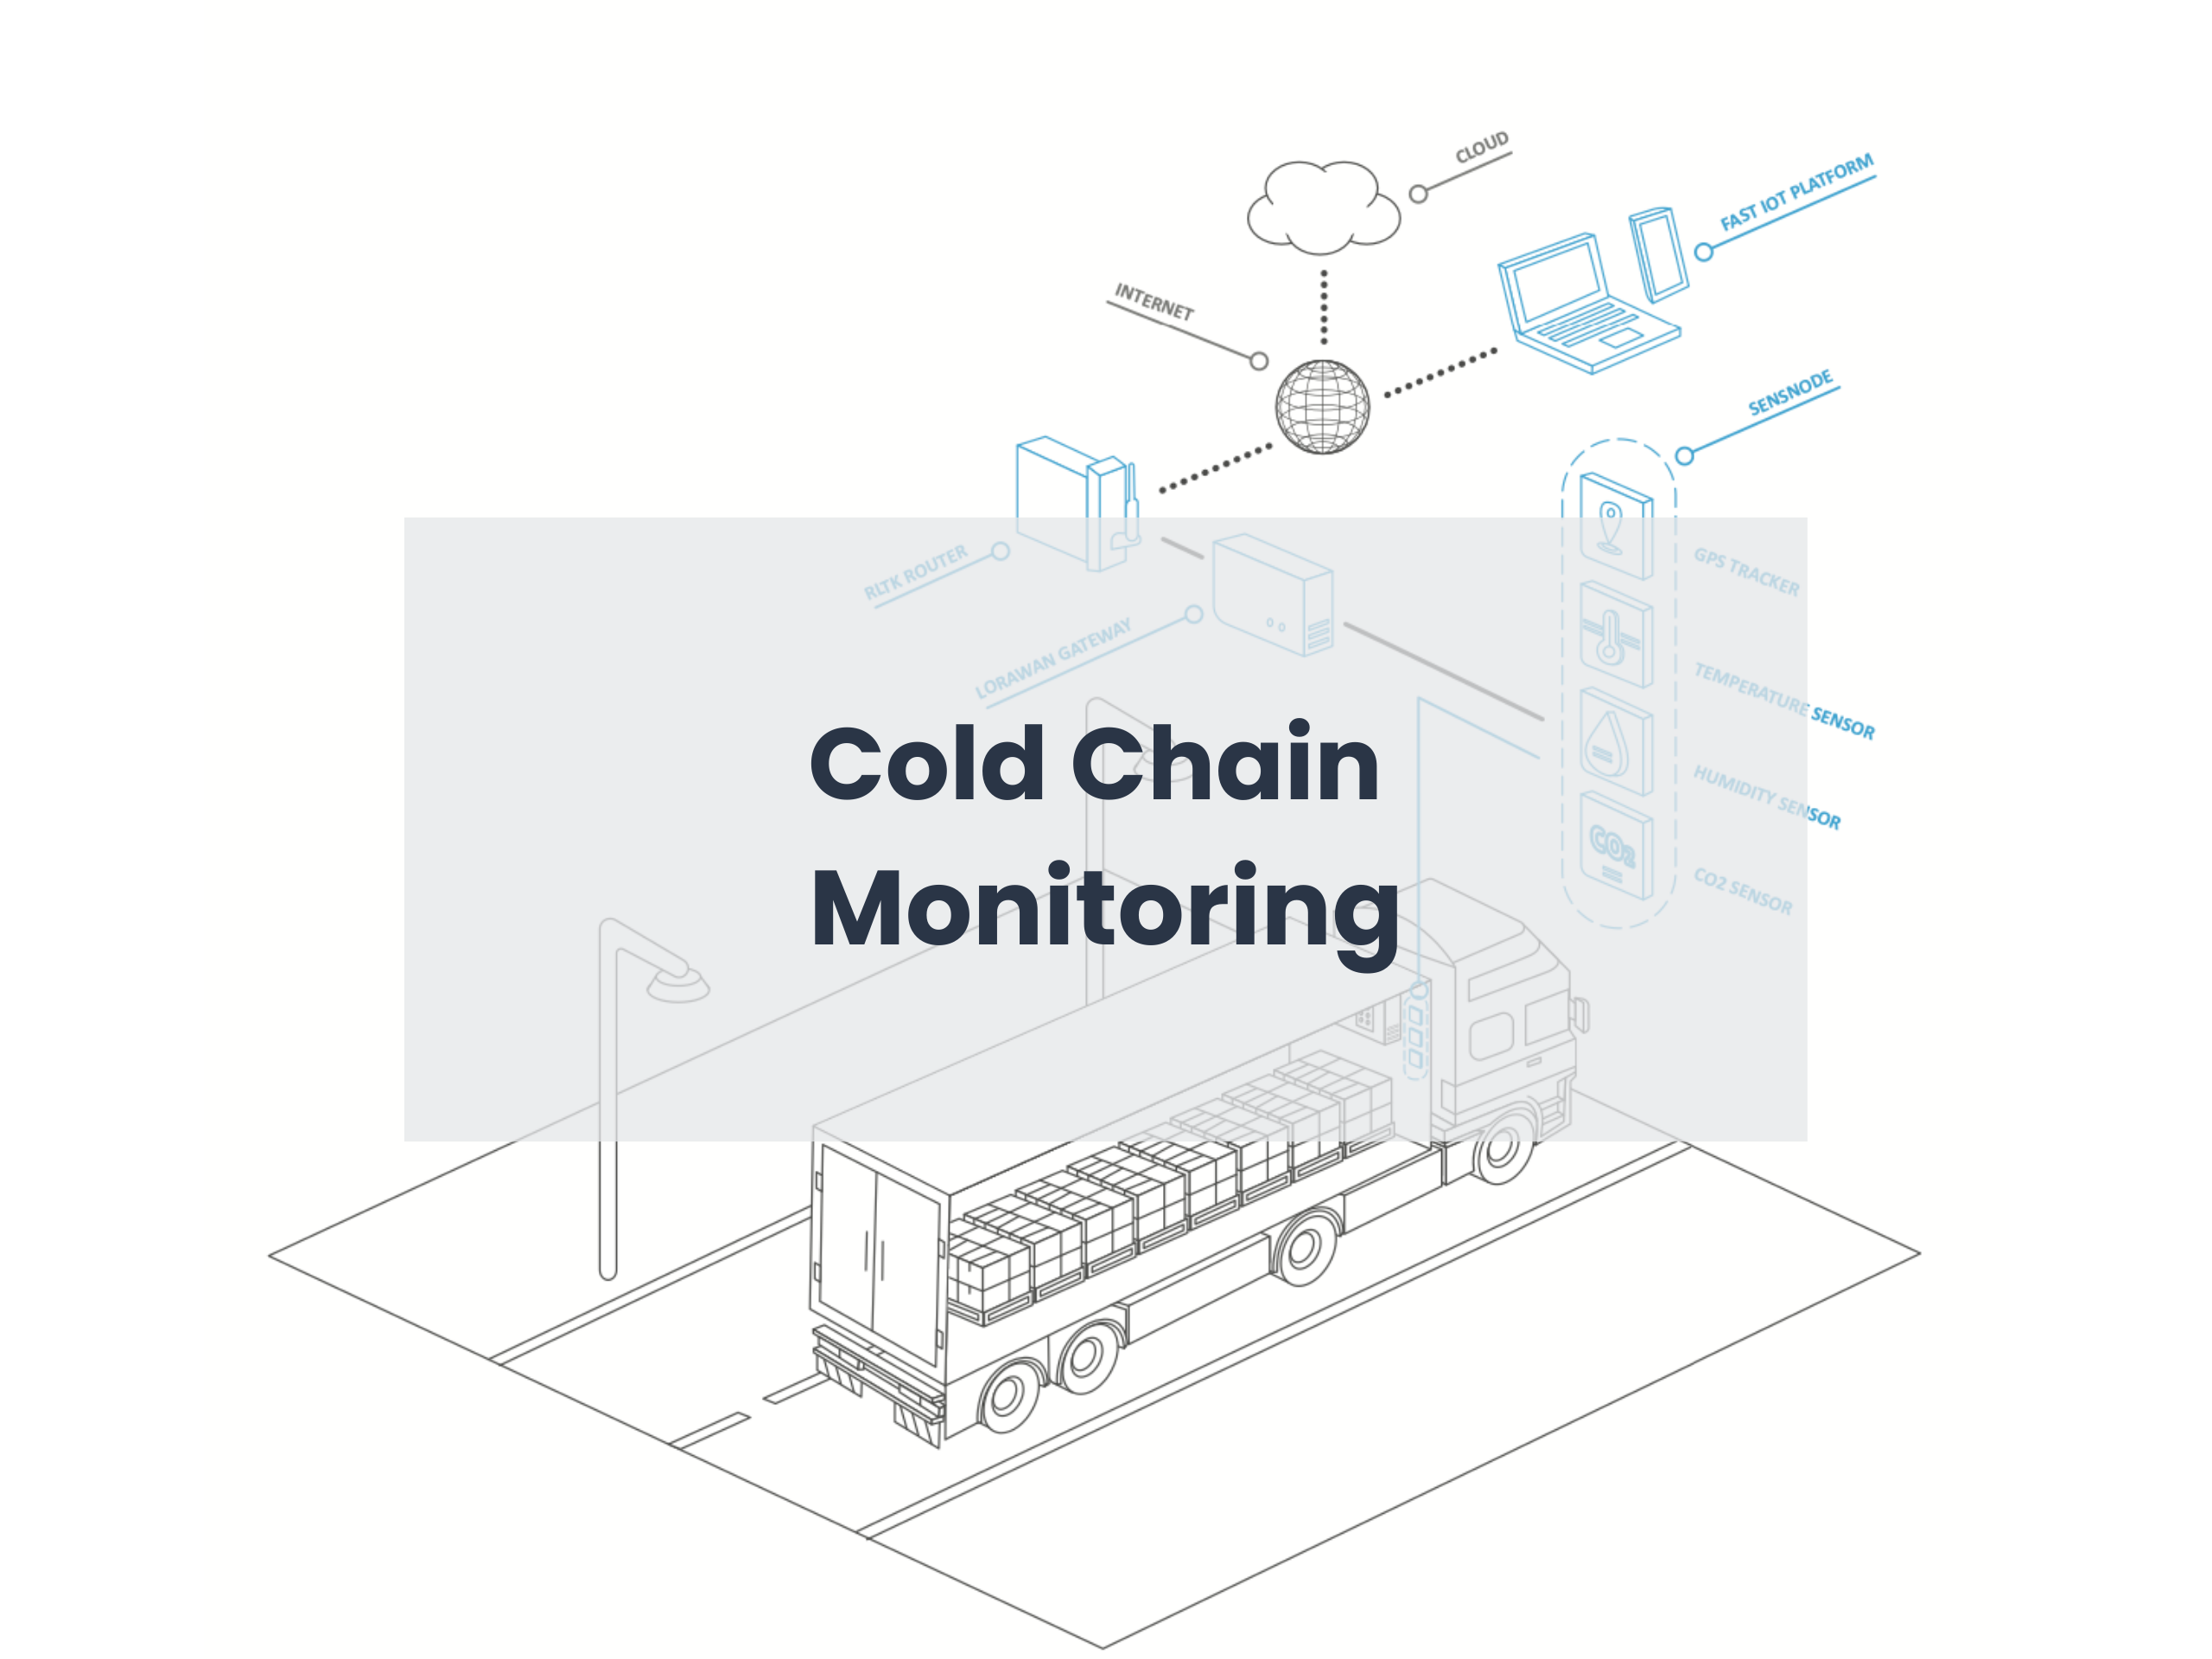 Cold Chain Monitoring